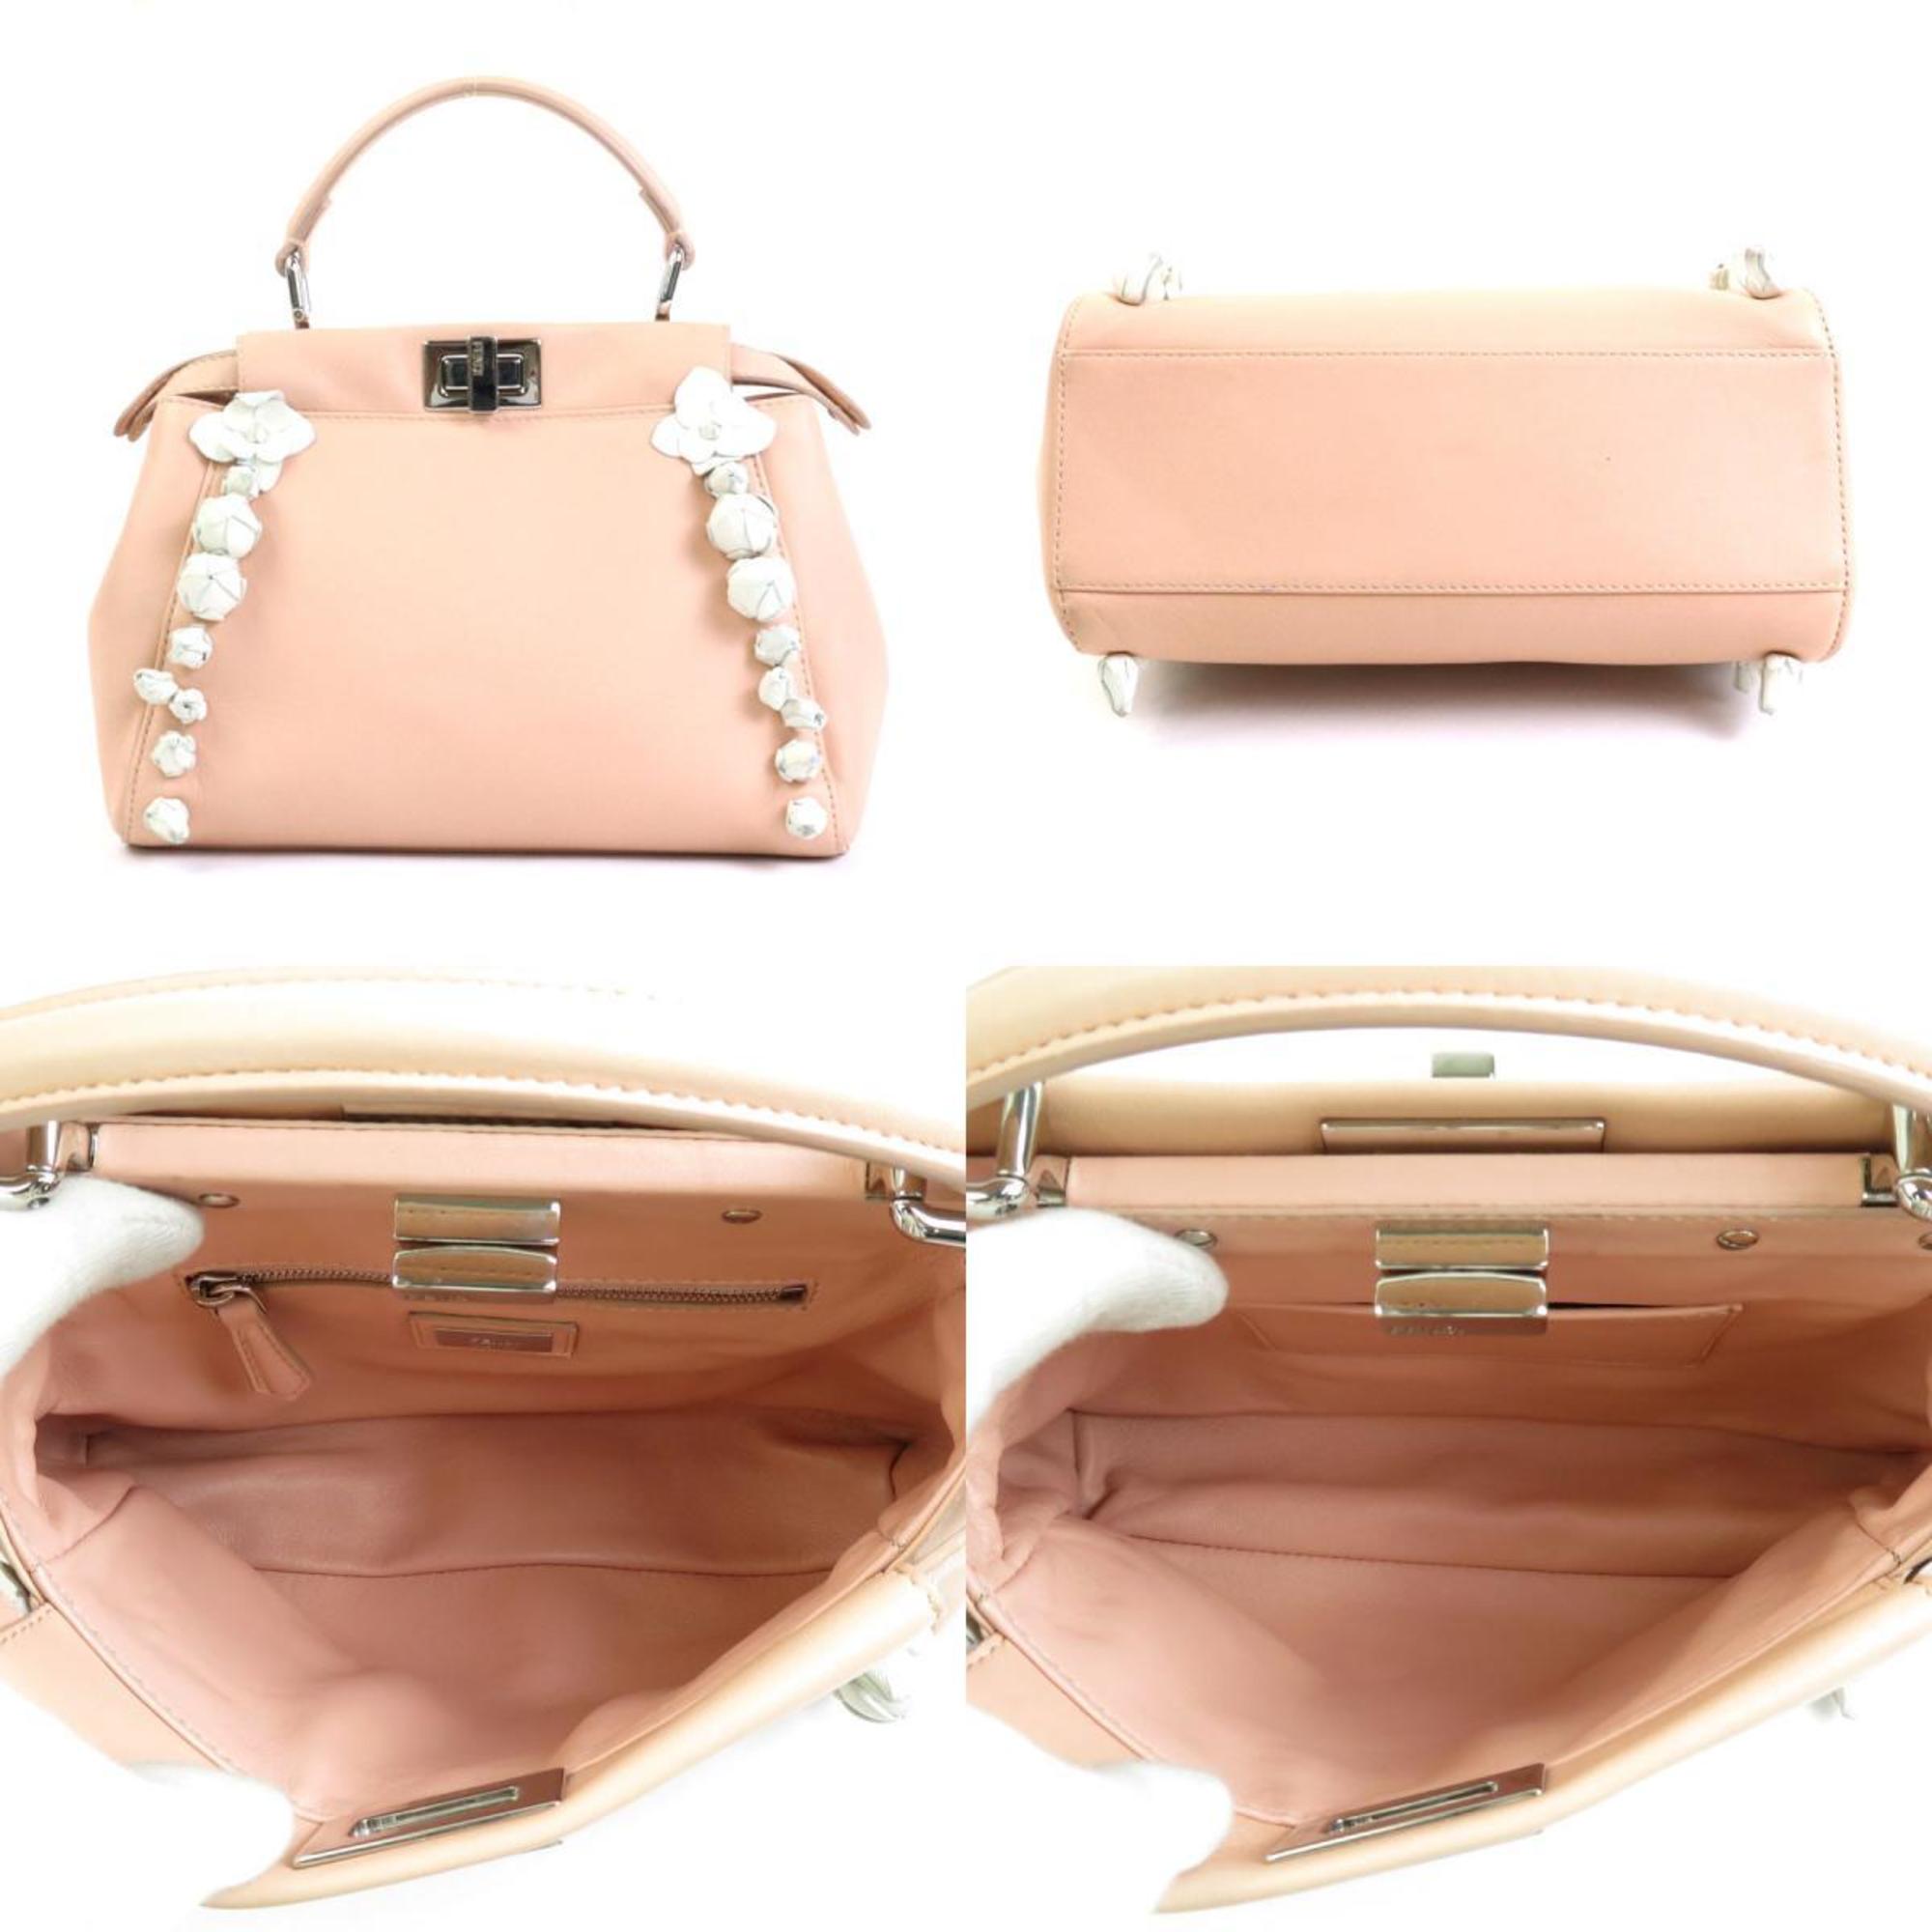 Fendi FENDI Handbag Crossbody Shoulder Bag Mini Peekaboo Leather Pink Beige/White Silver Women's